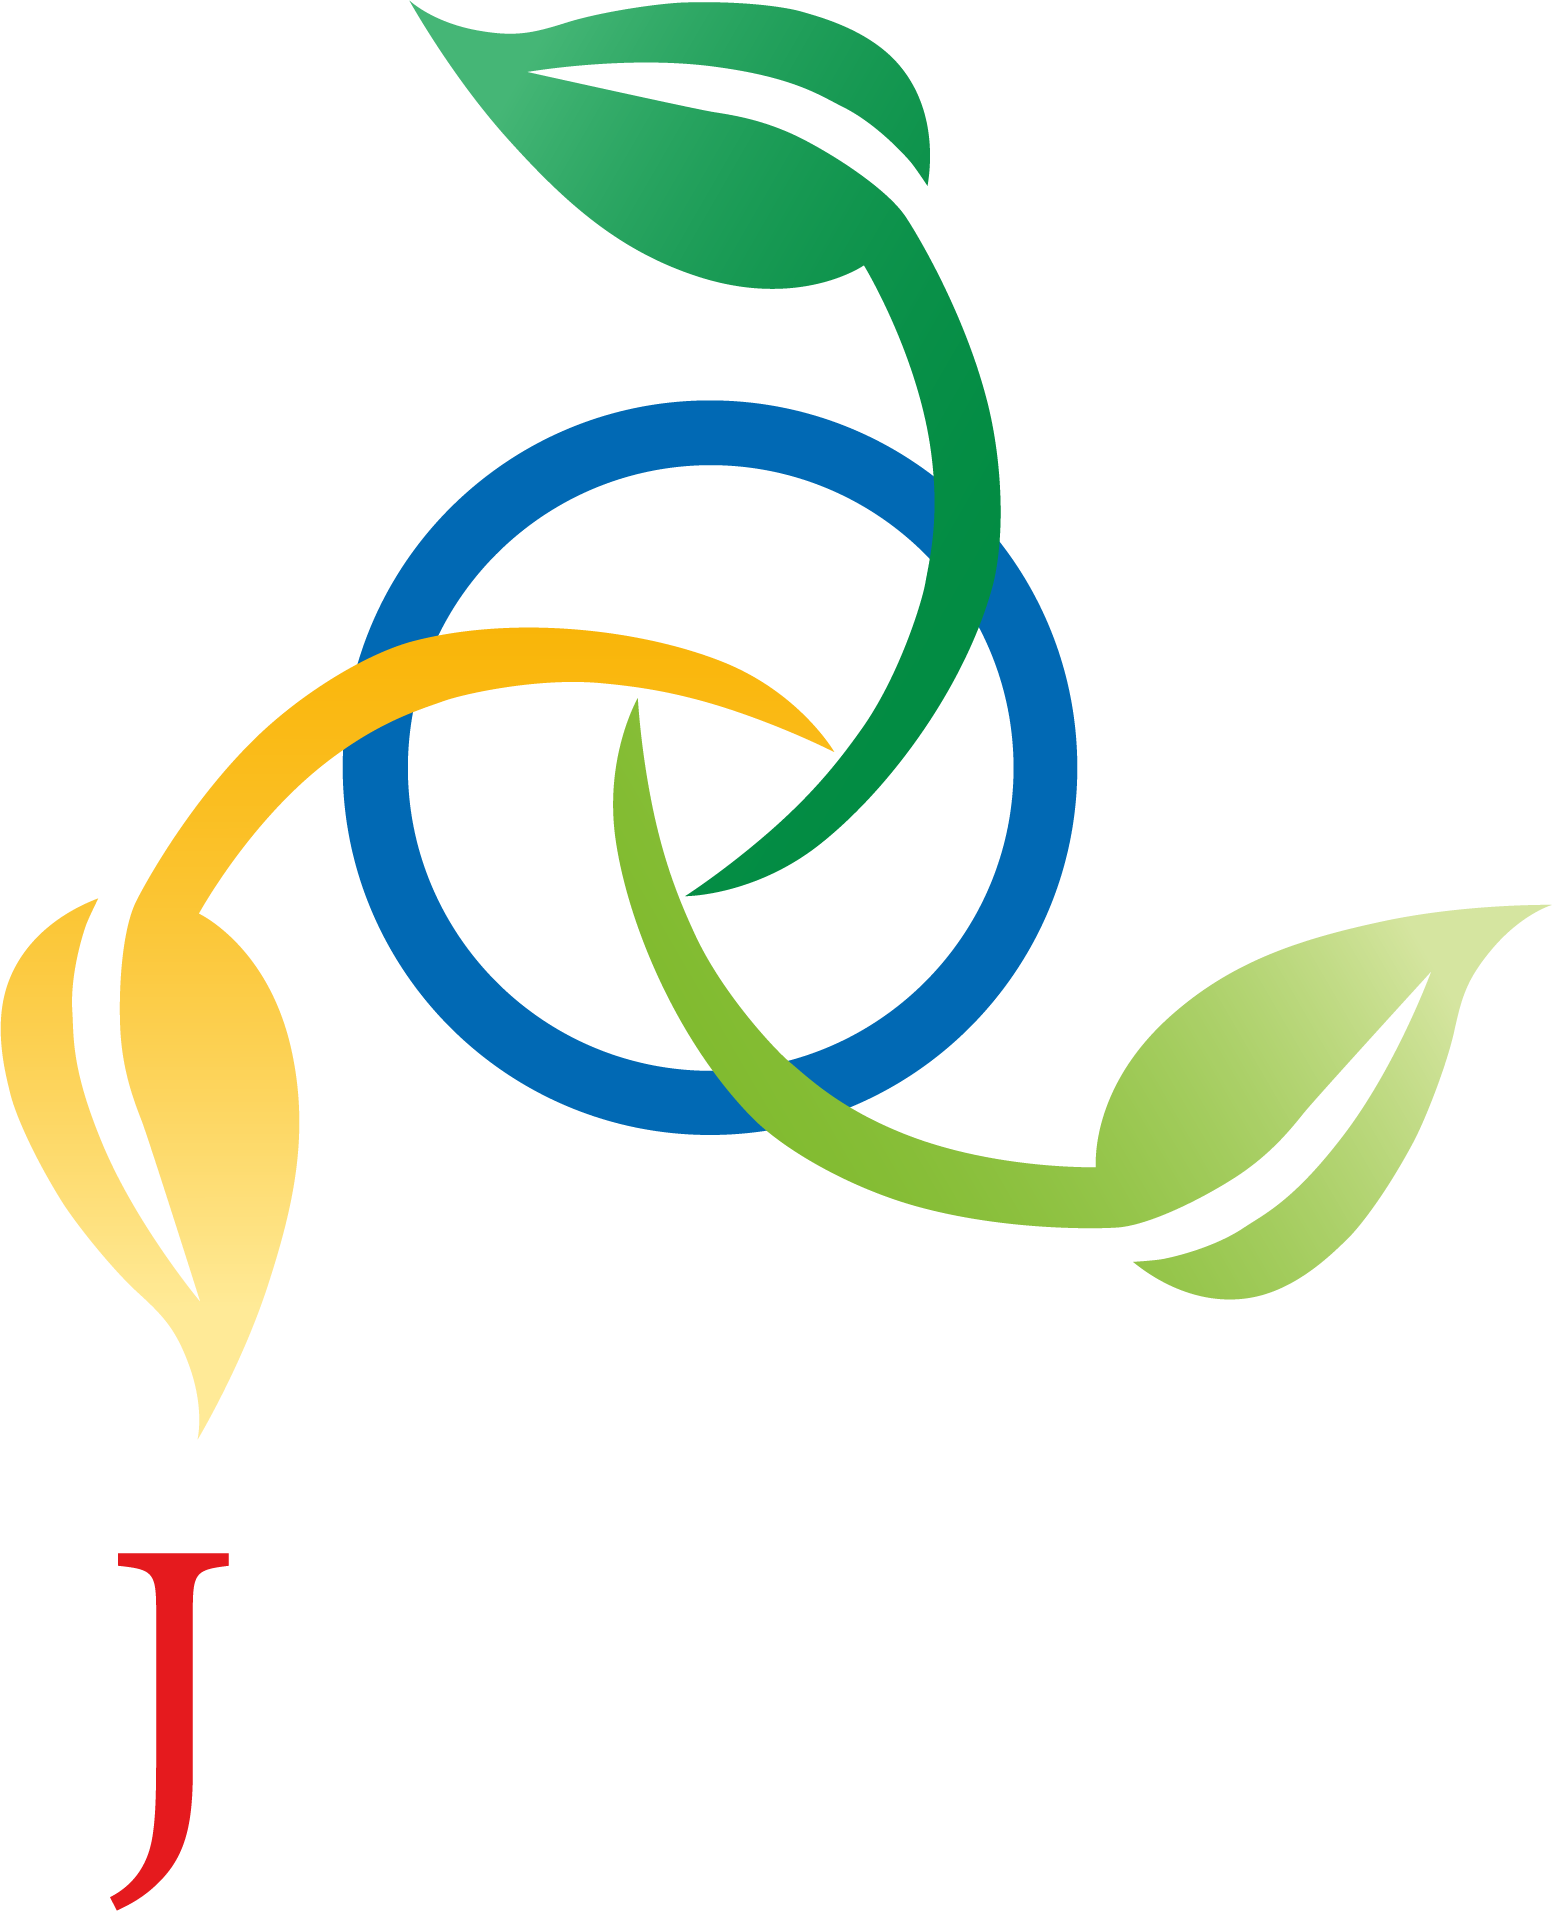 J-STAD Study Group